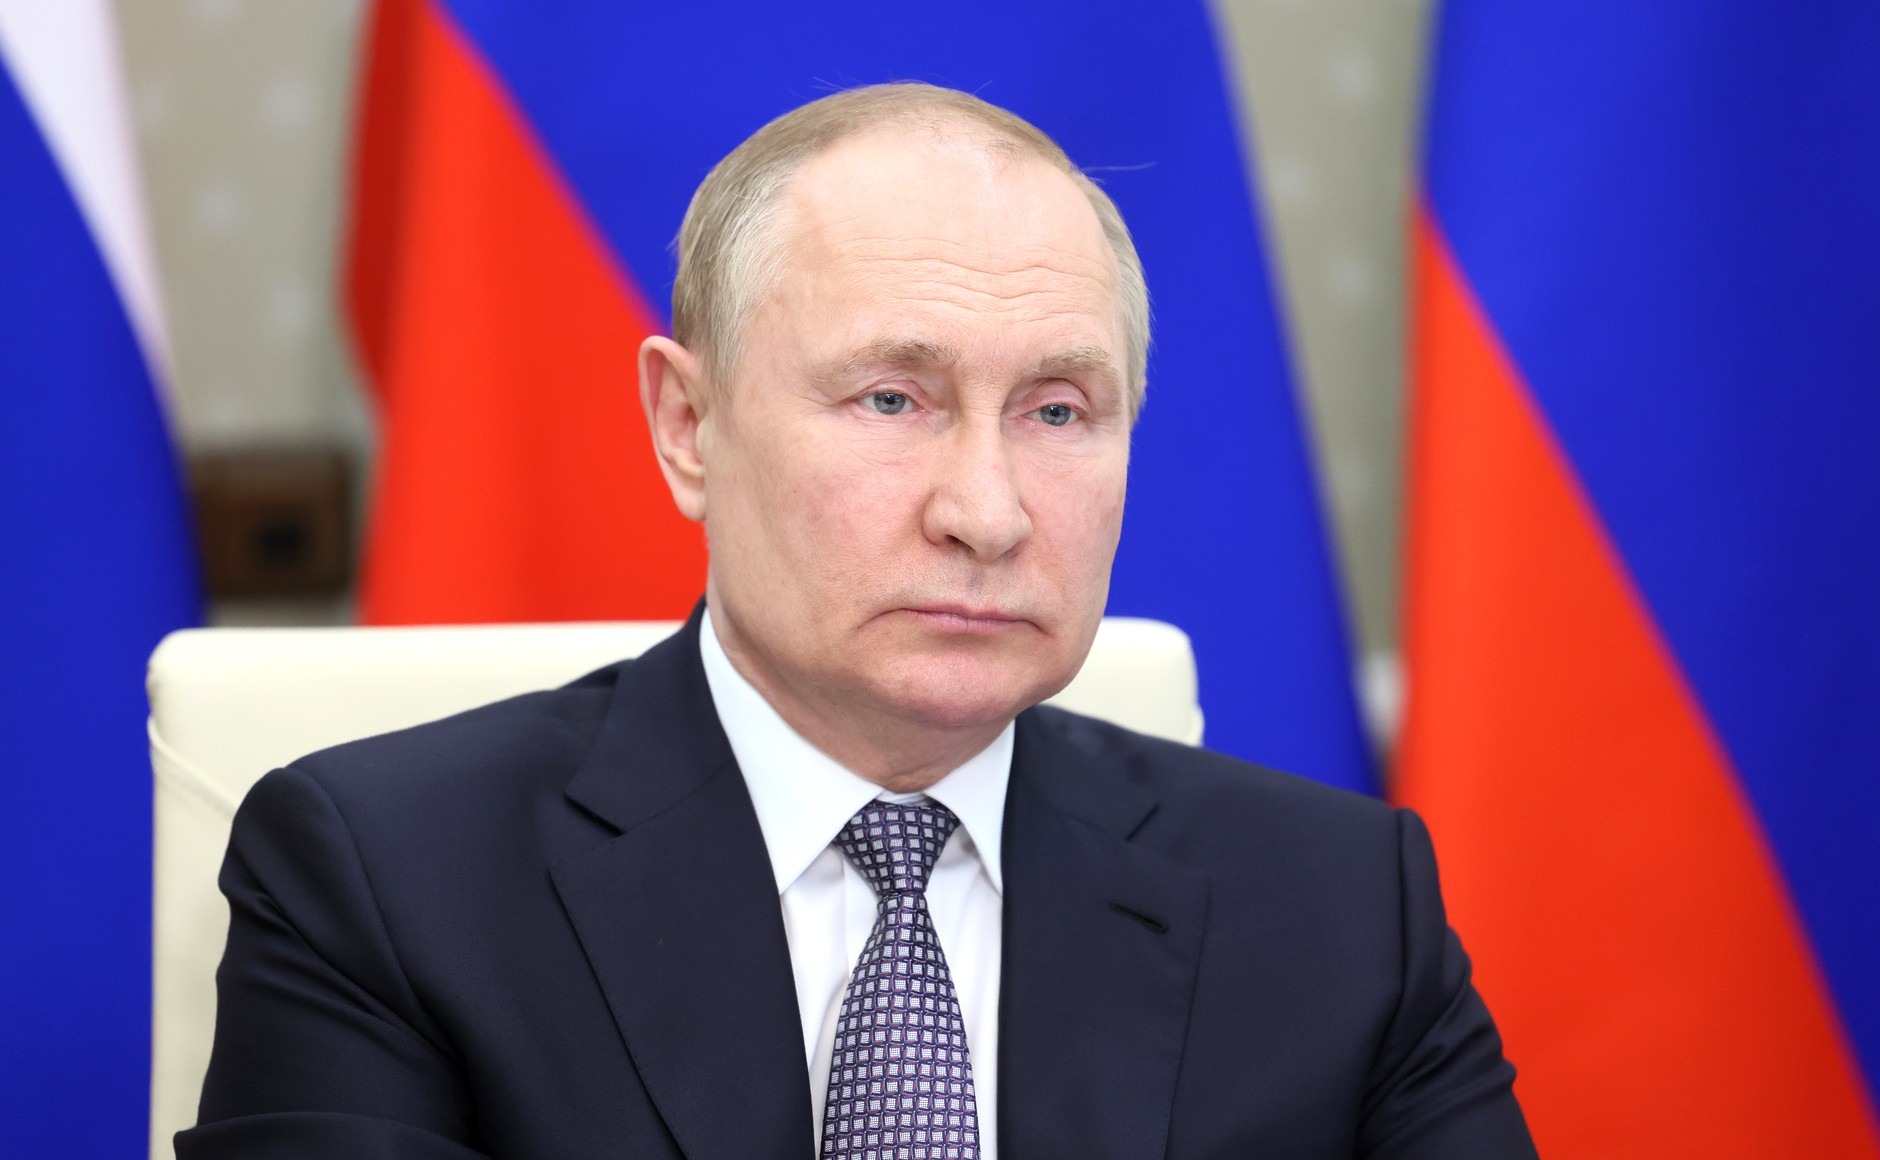 Putin Replaces Defense Minister with Economist Andrei Belousov [Video]